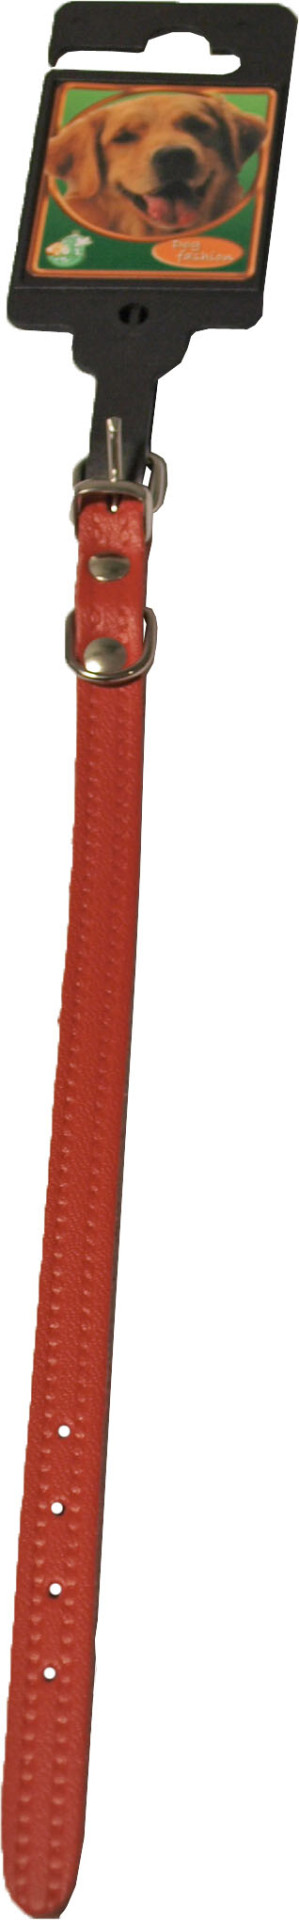 Halsband rood